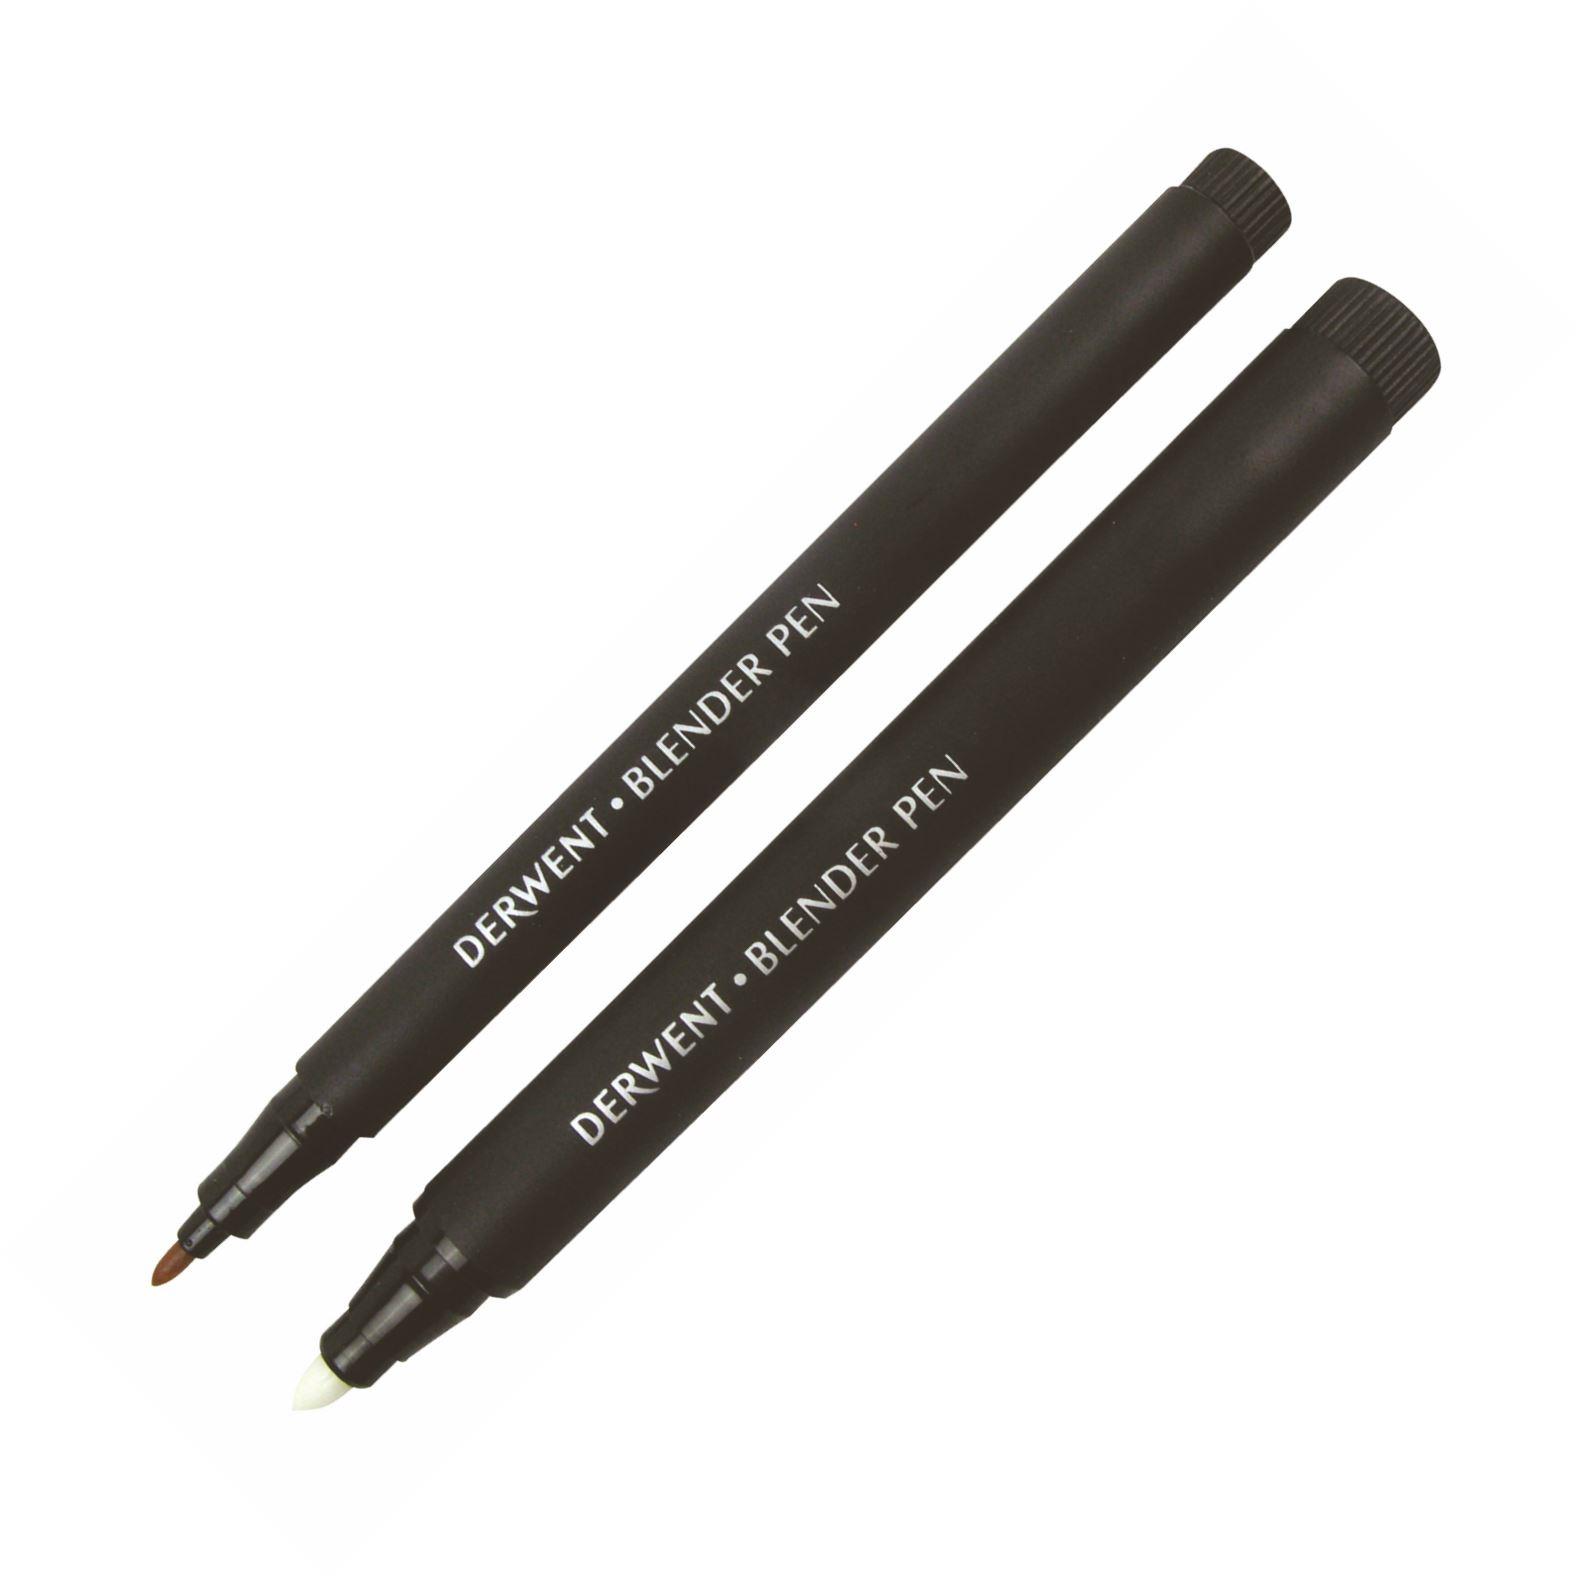 2 pencil blender pens from derwent